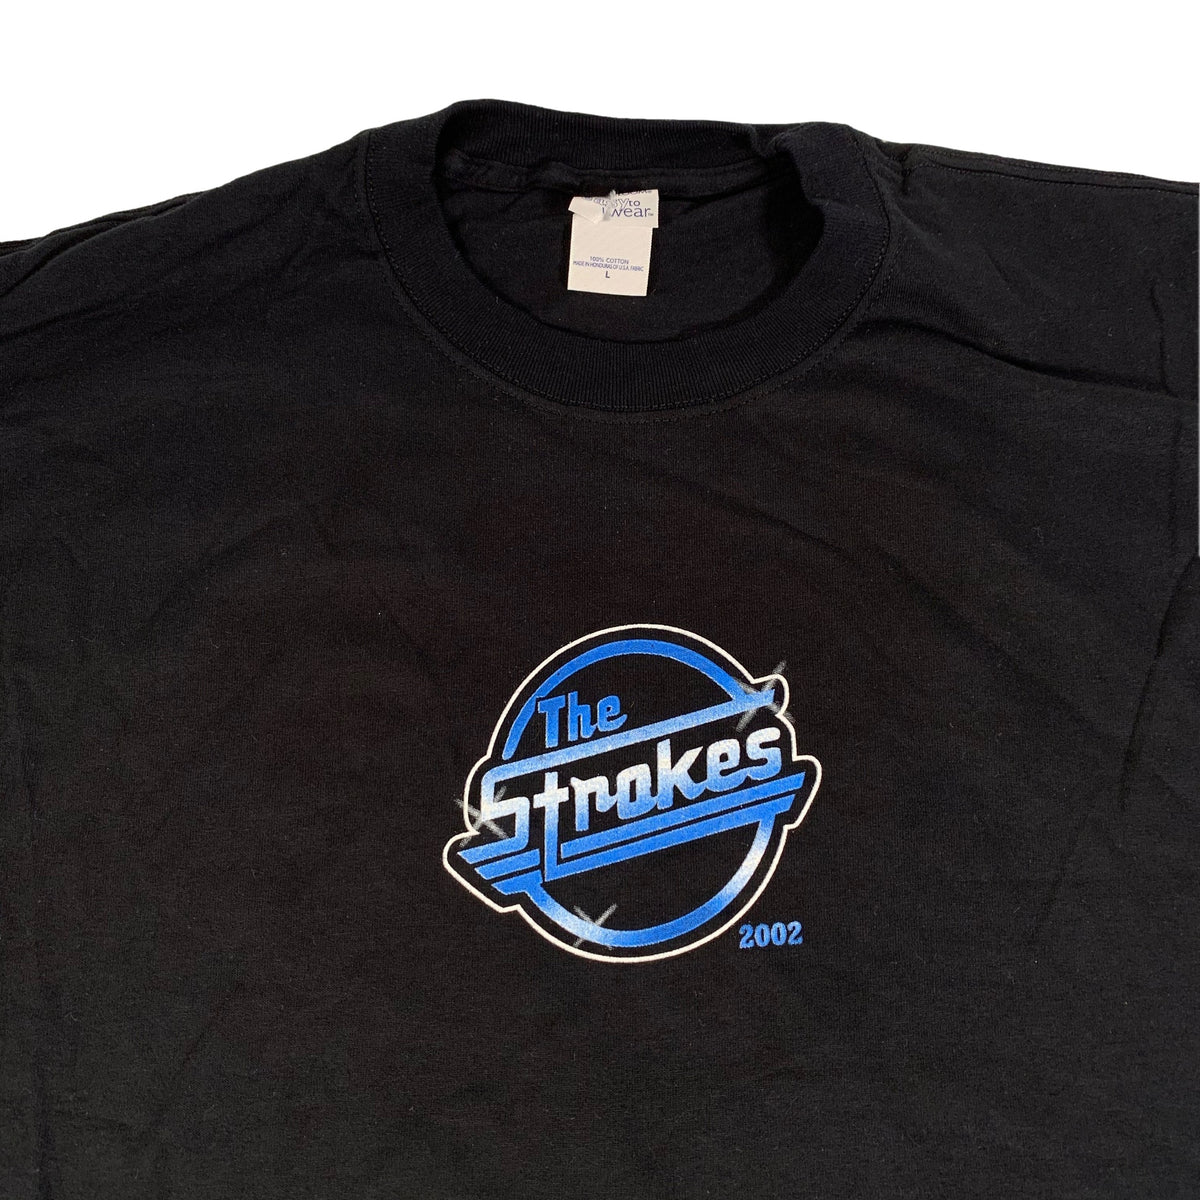 Vintage The Strokes &quot;Wyckyd Sceptre&quot; T-Shirt - jointcustodydc